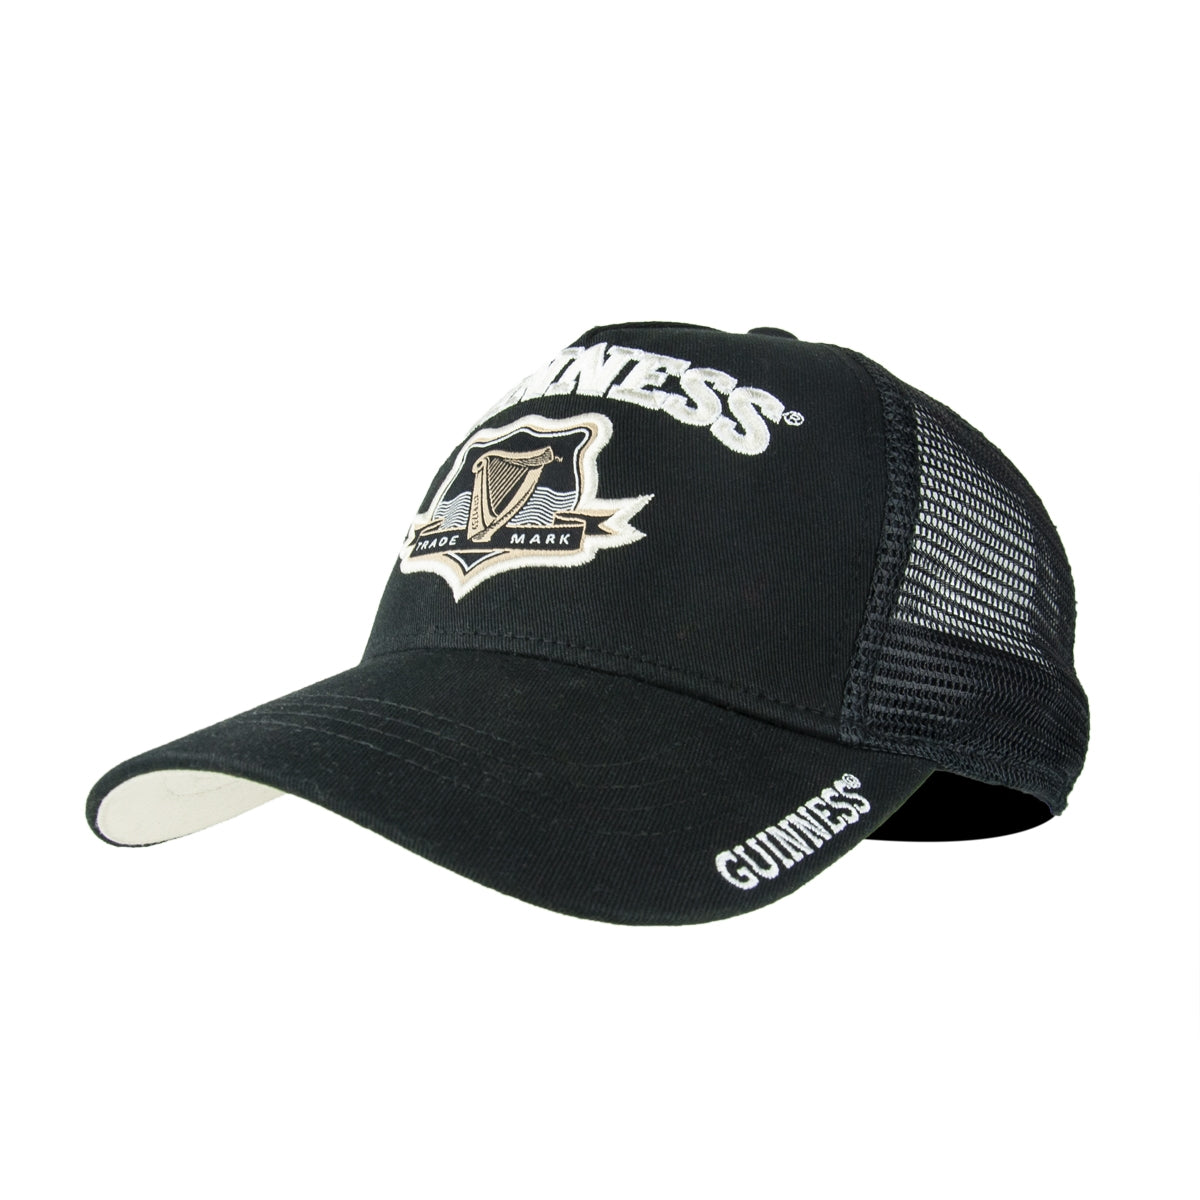 An adjustable Guinness Signature Black Trucker Mesh Baseball Cap with the Irish Harlequins logo on it.